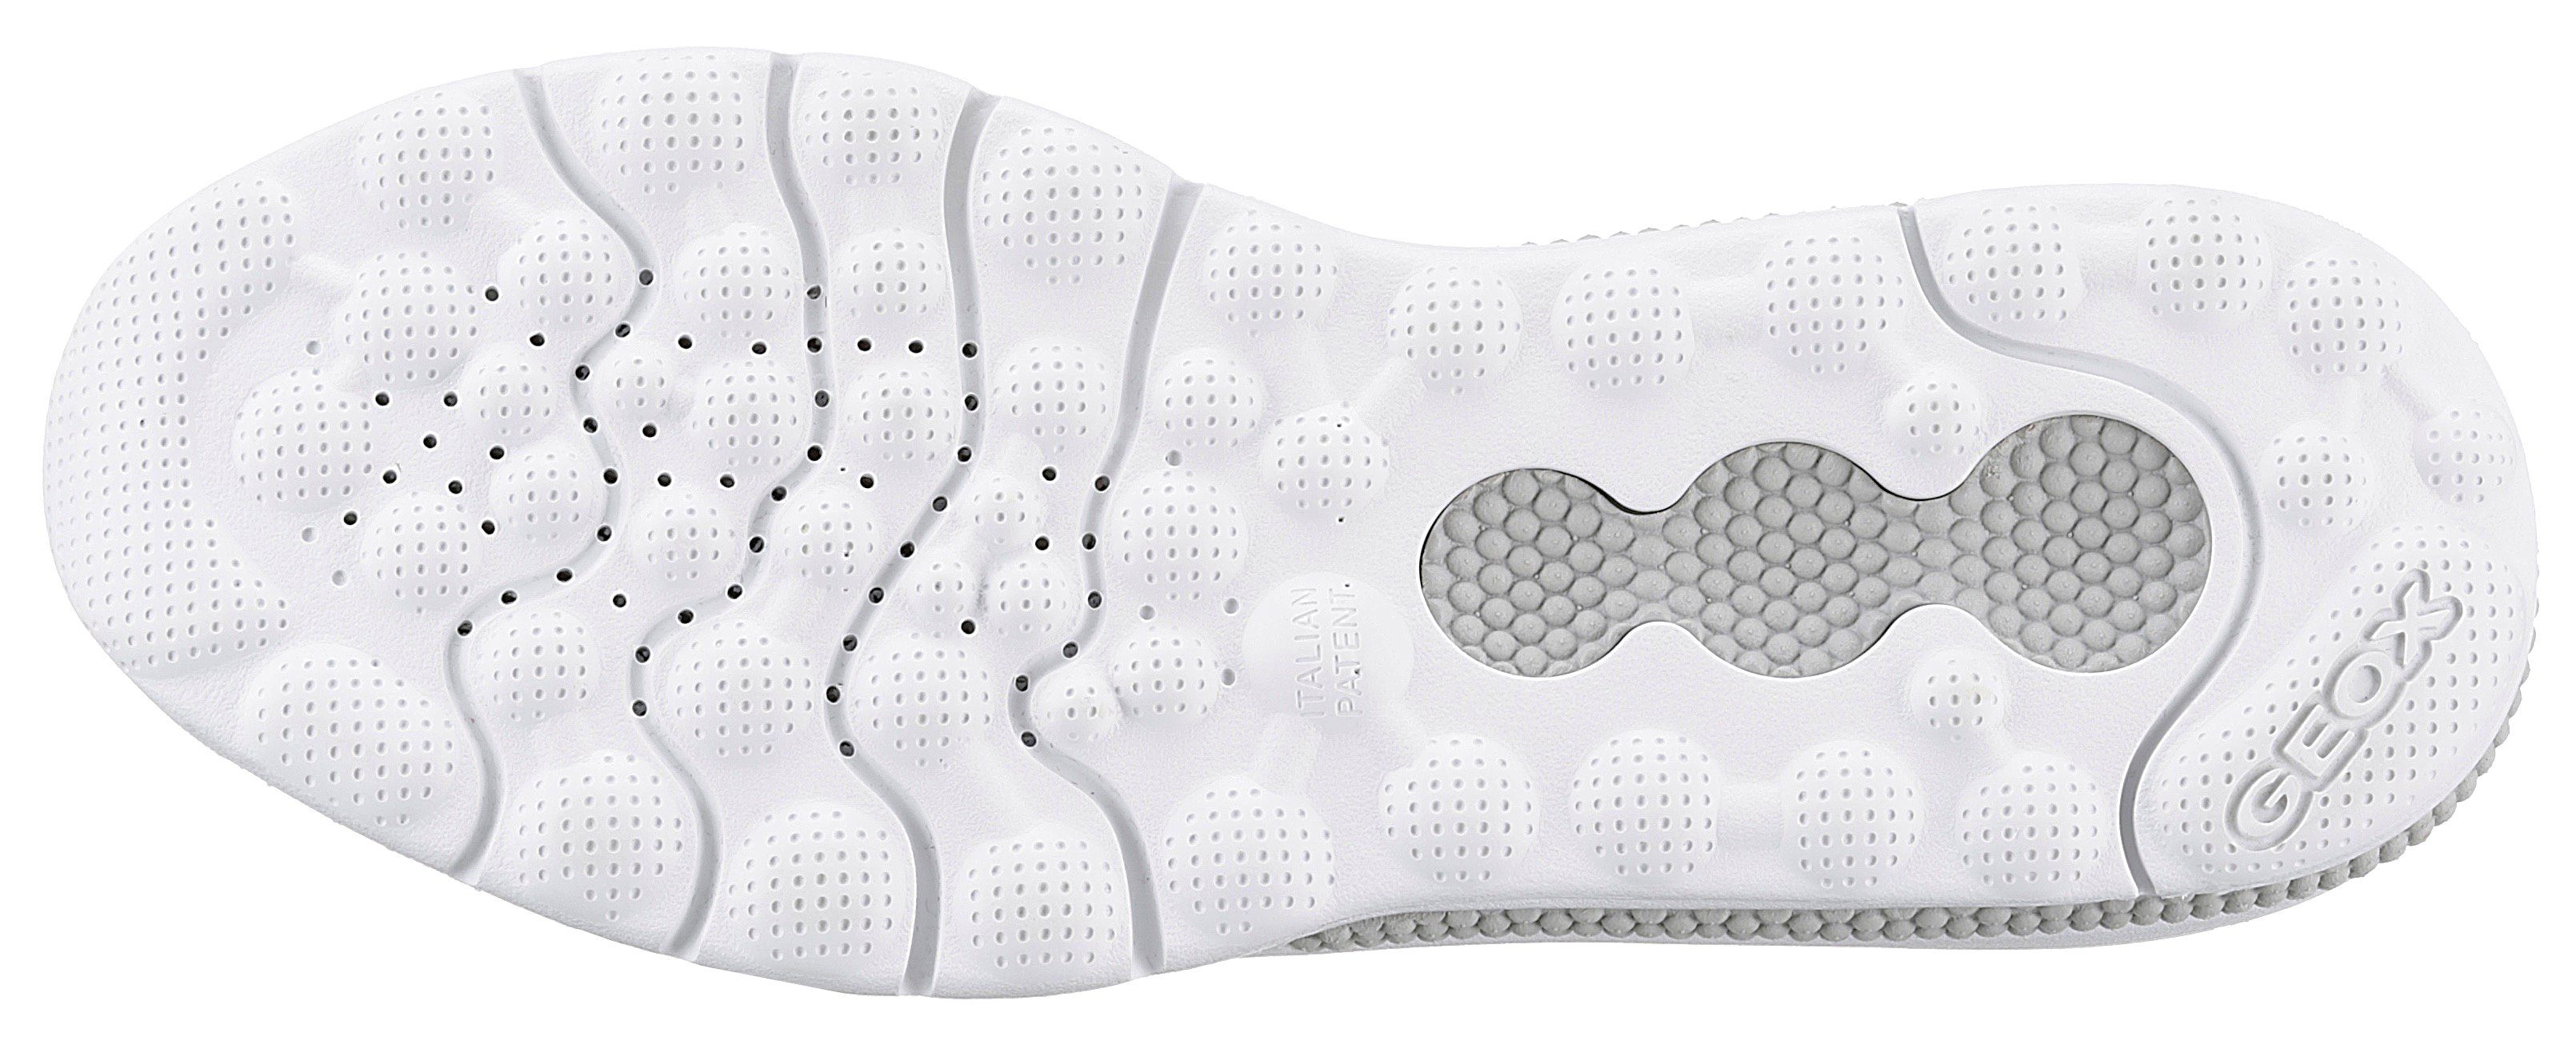 Spezial Sneaker Geox U weiß-grau Membrane Geox mit SPHERICA ACTIF